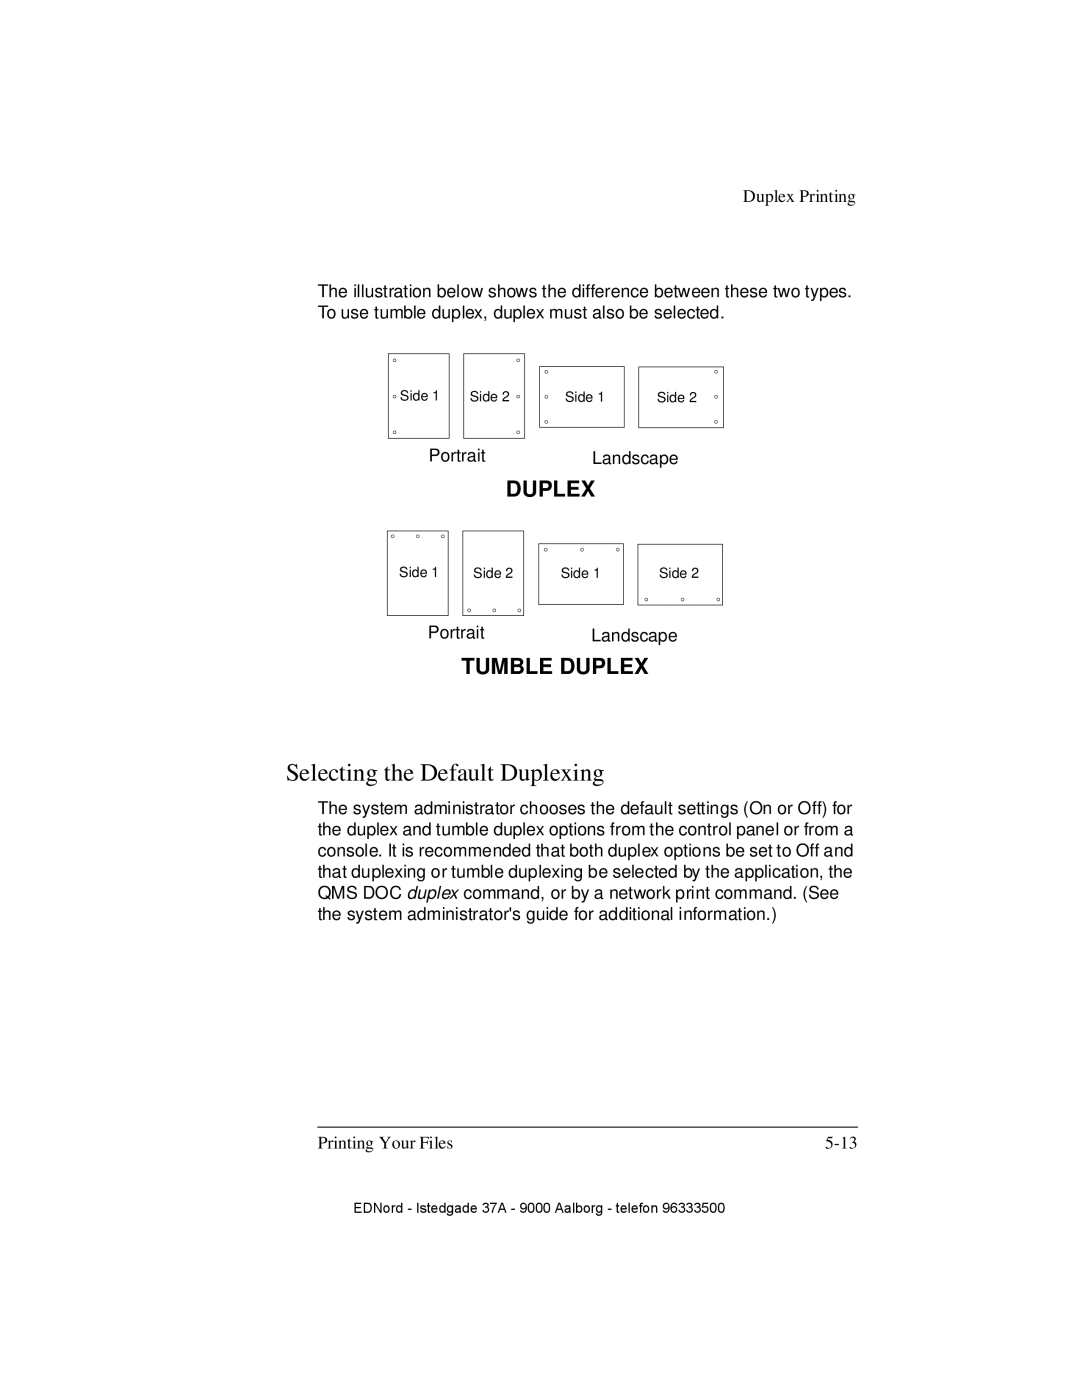 IBM QMS 4525 manual Selecting the Default Duplexing, Tumble Duplex 